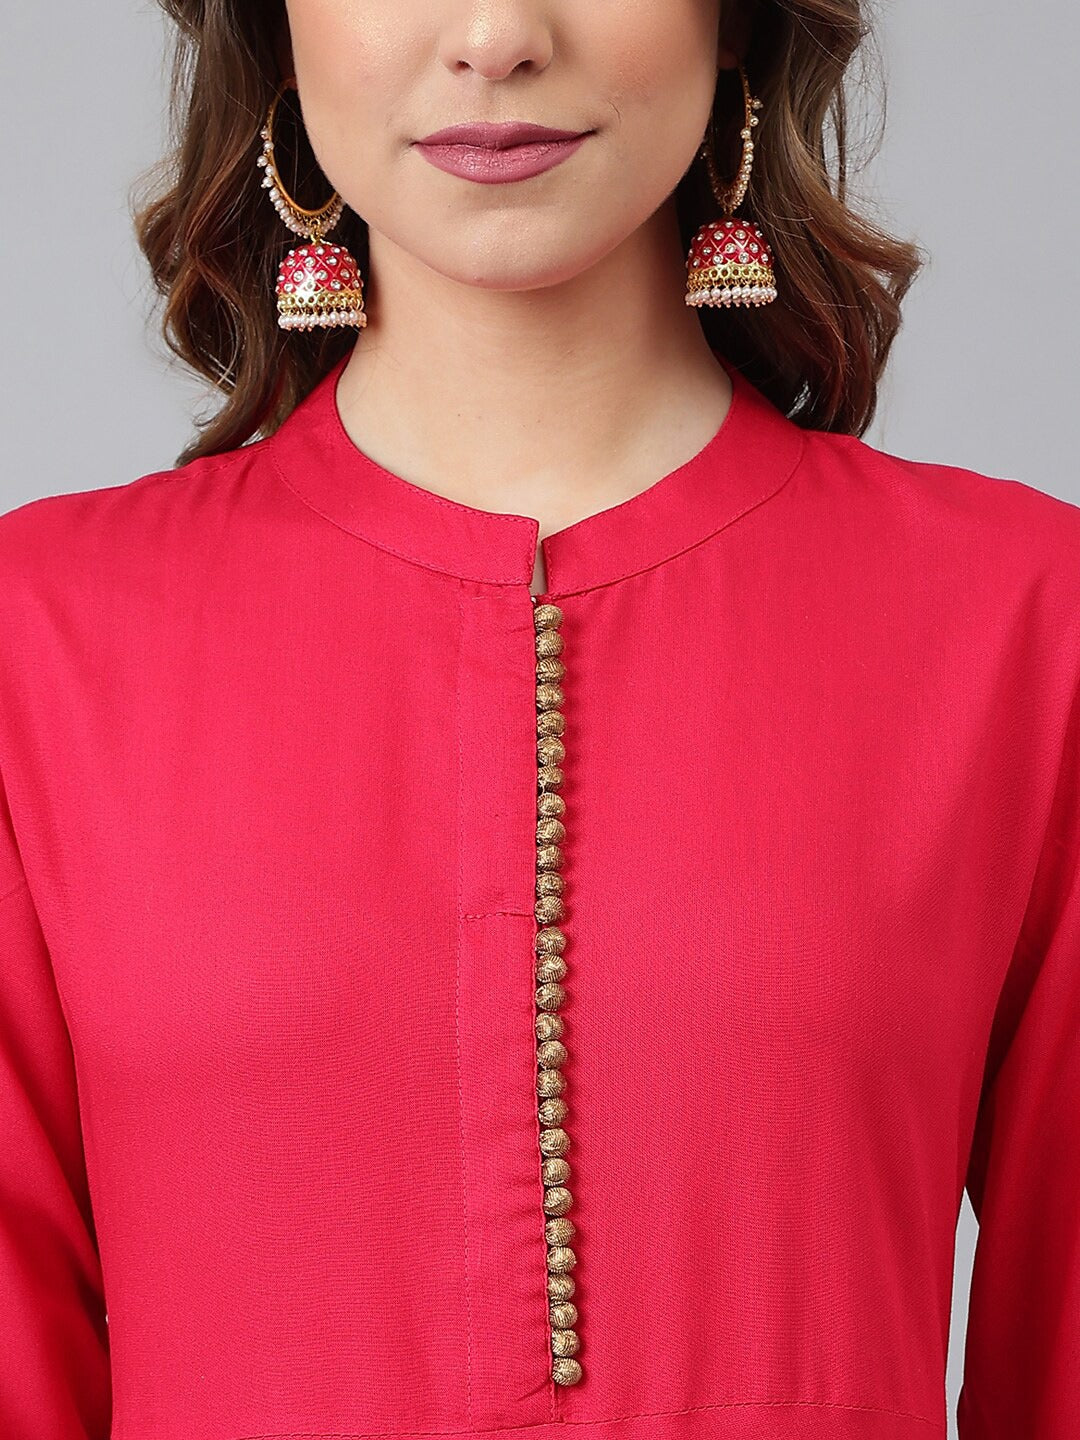 Ladies Party Wear Full Sleeve Collar Neck Silk Designer Gown at 8000.00 INR  in Varanasi | Anjana Trading